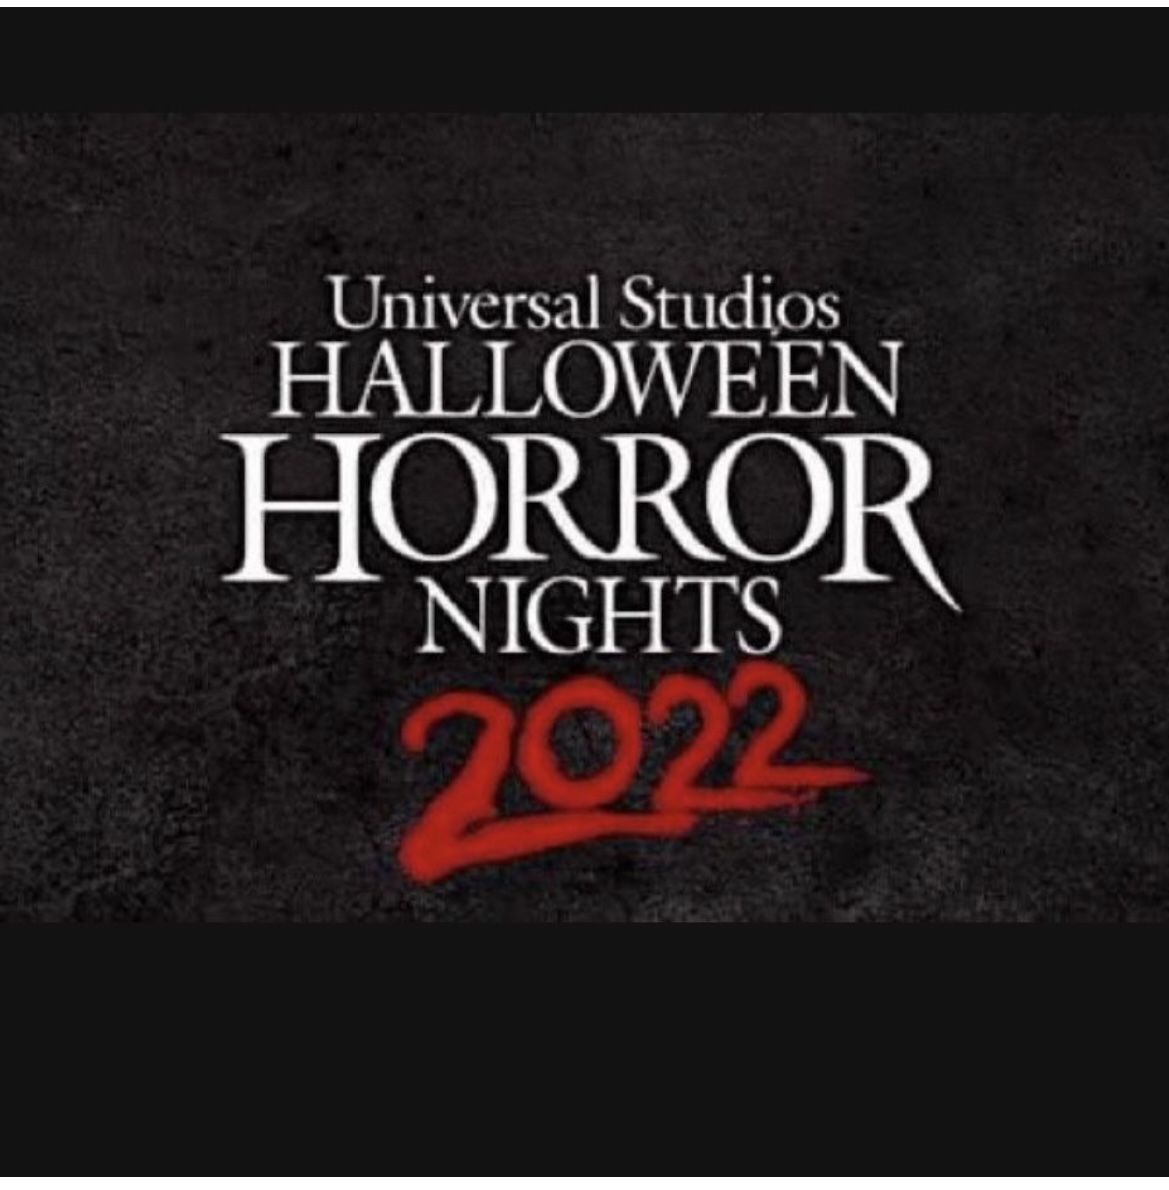 Universal Studios Halloween Horror Nights 2022